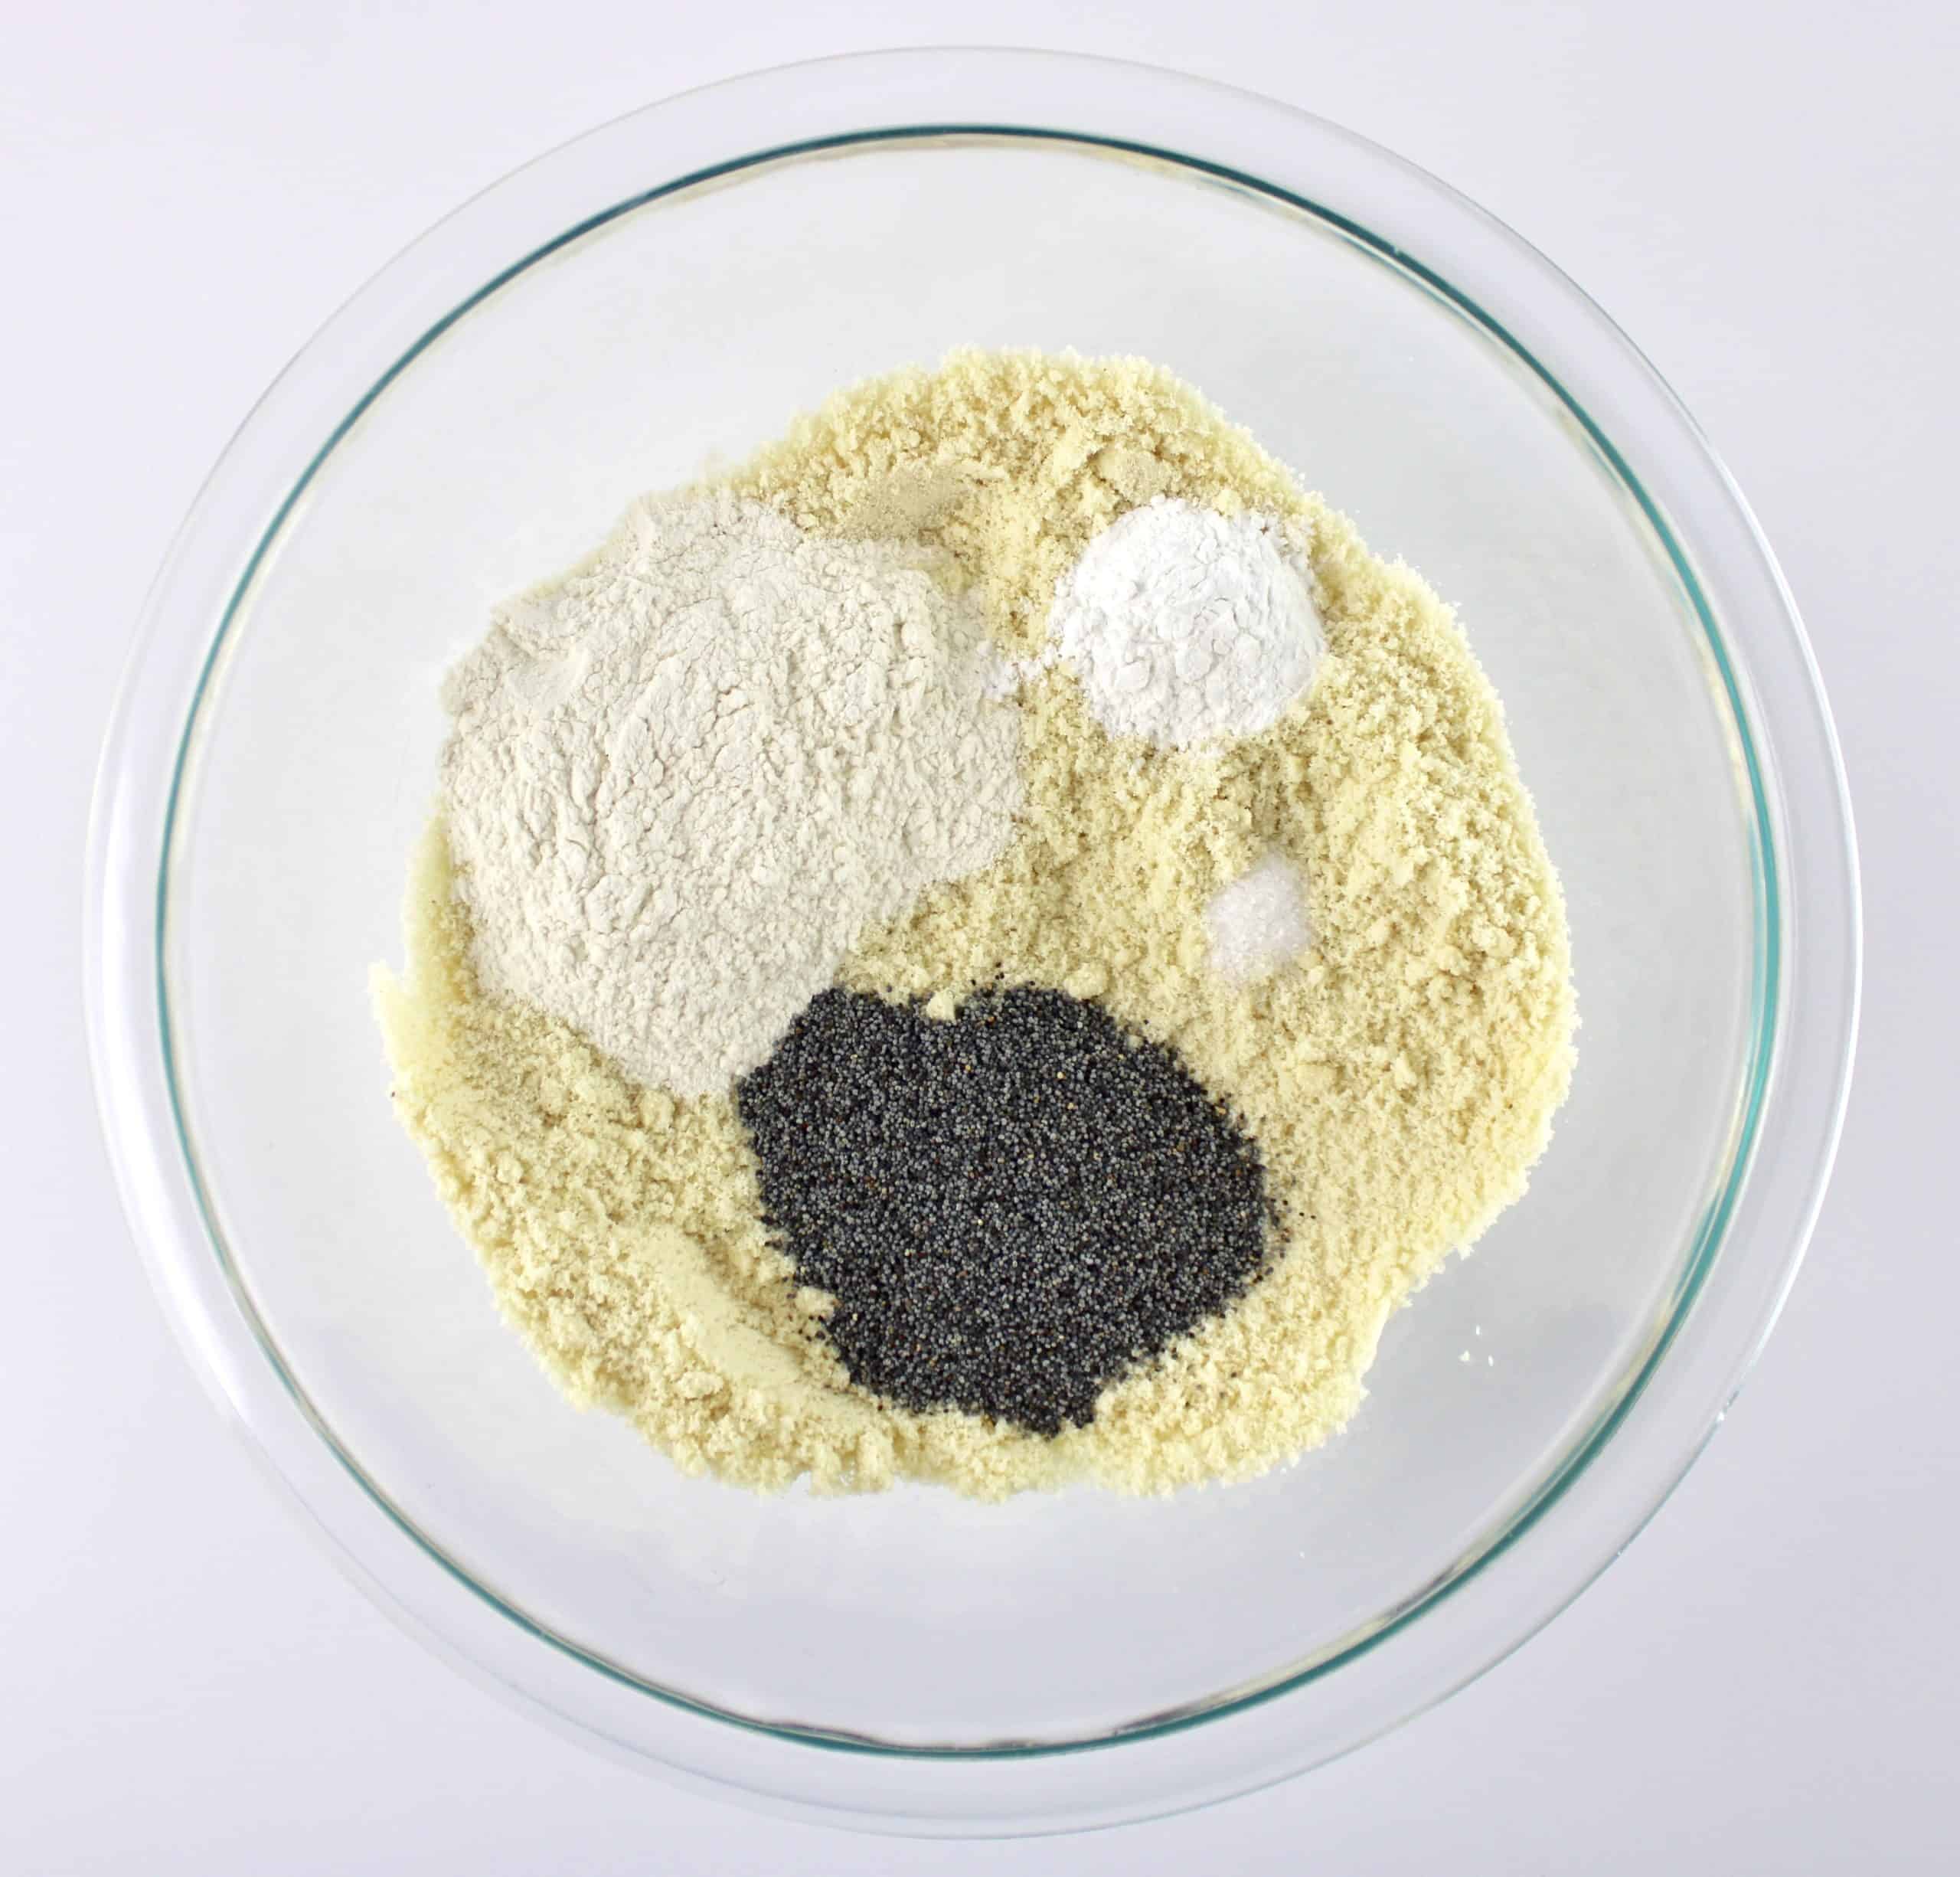 almond flour oat fiber salt and poppy seeds in glass bowl unmixed